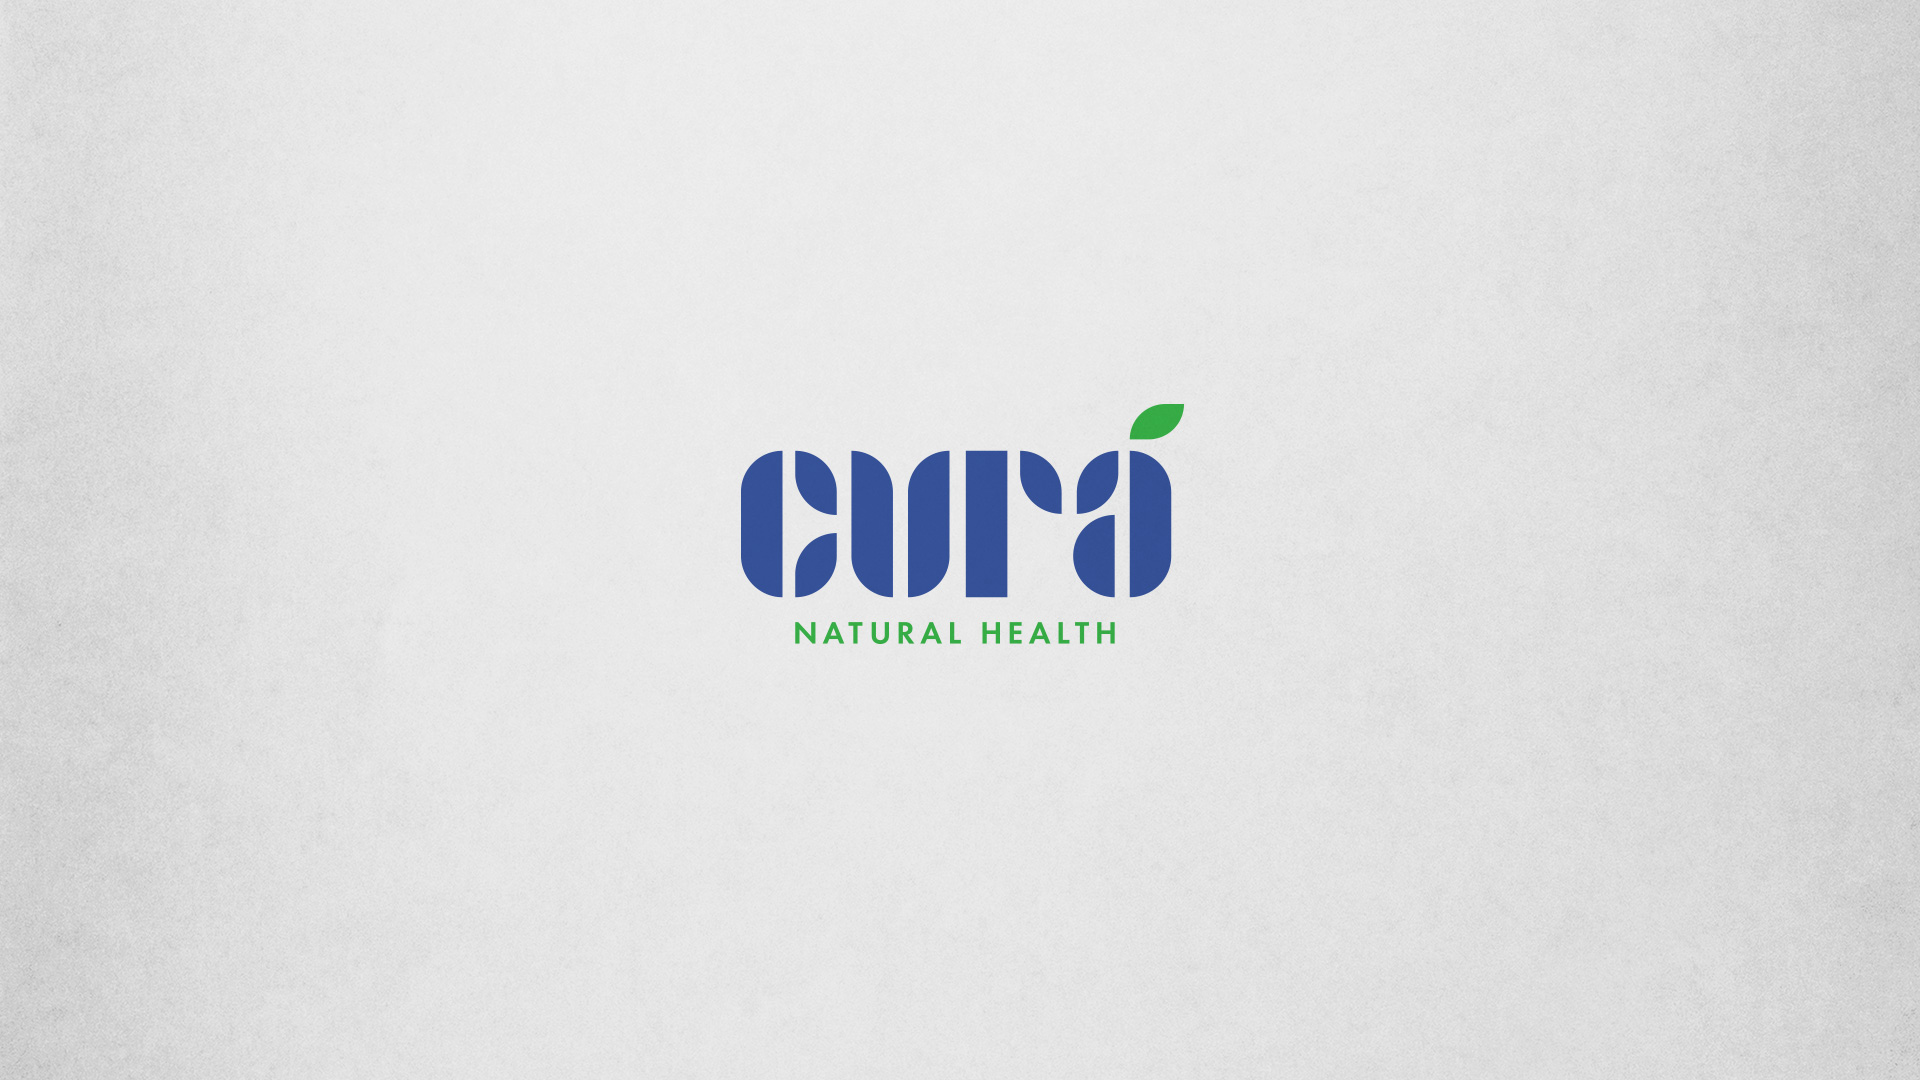 Cura-Adobe-Hidden-Treasures-Logo-Design-Contest-Winner